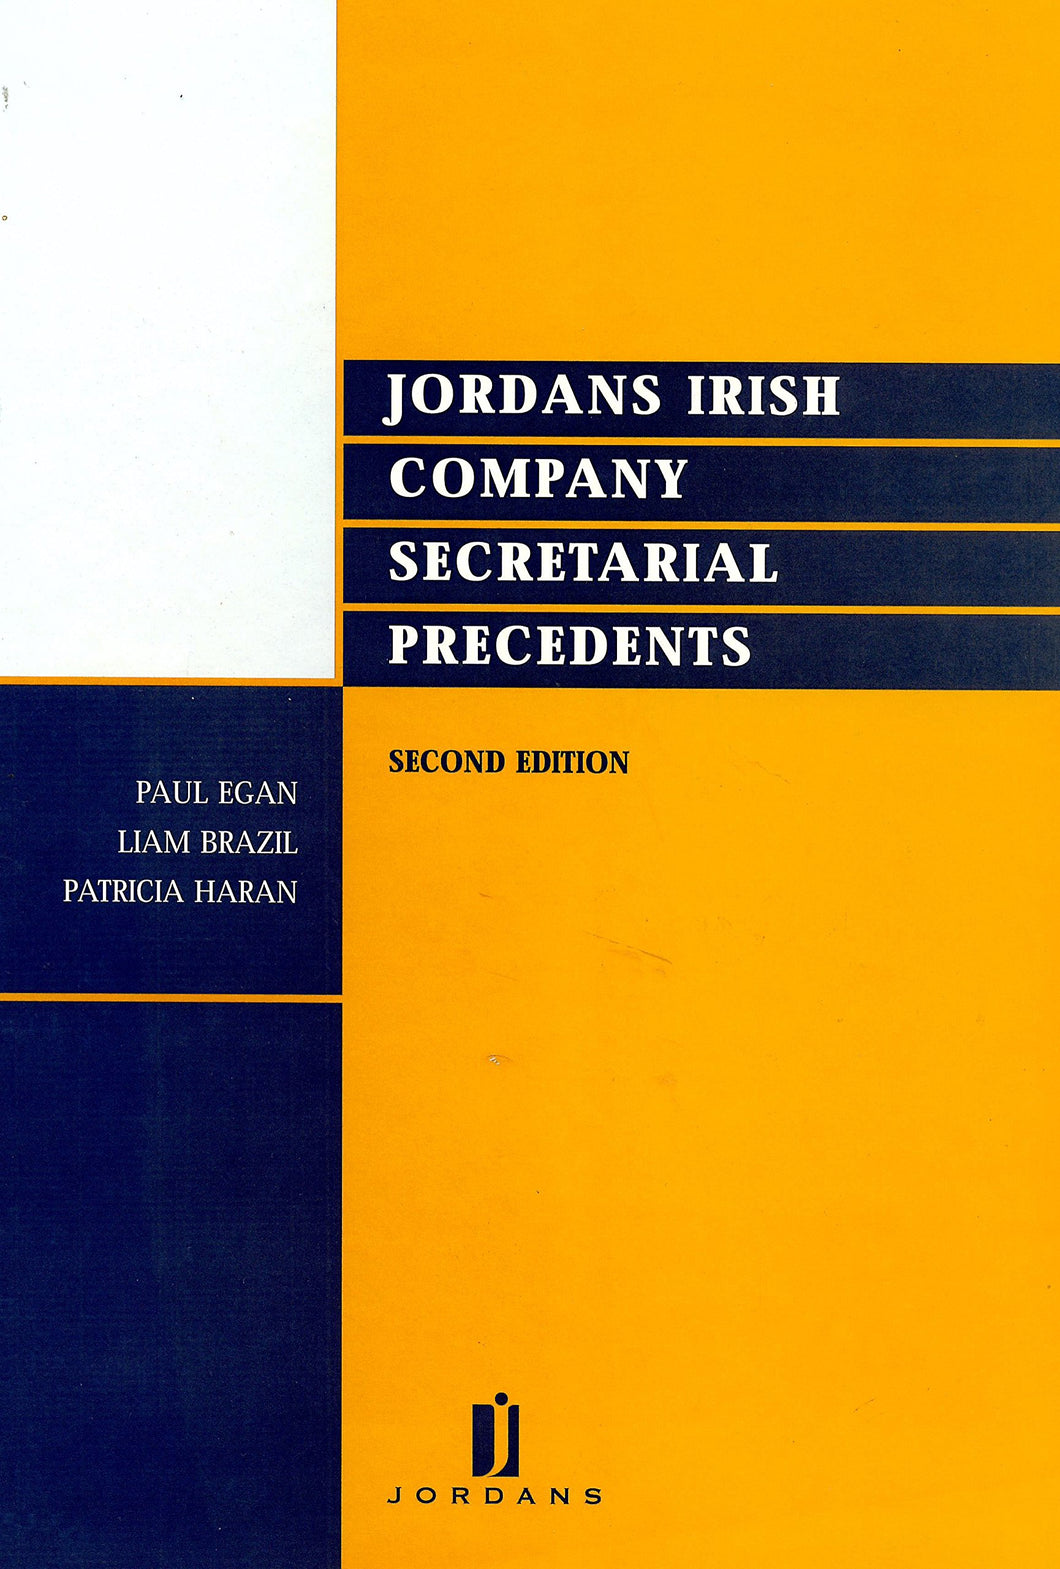 Jordan's Irish Company Secretarial Precedents